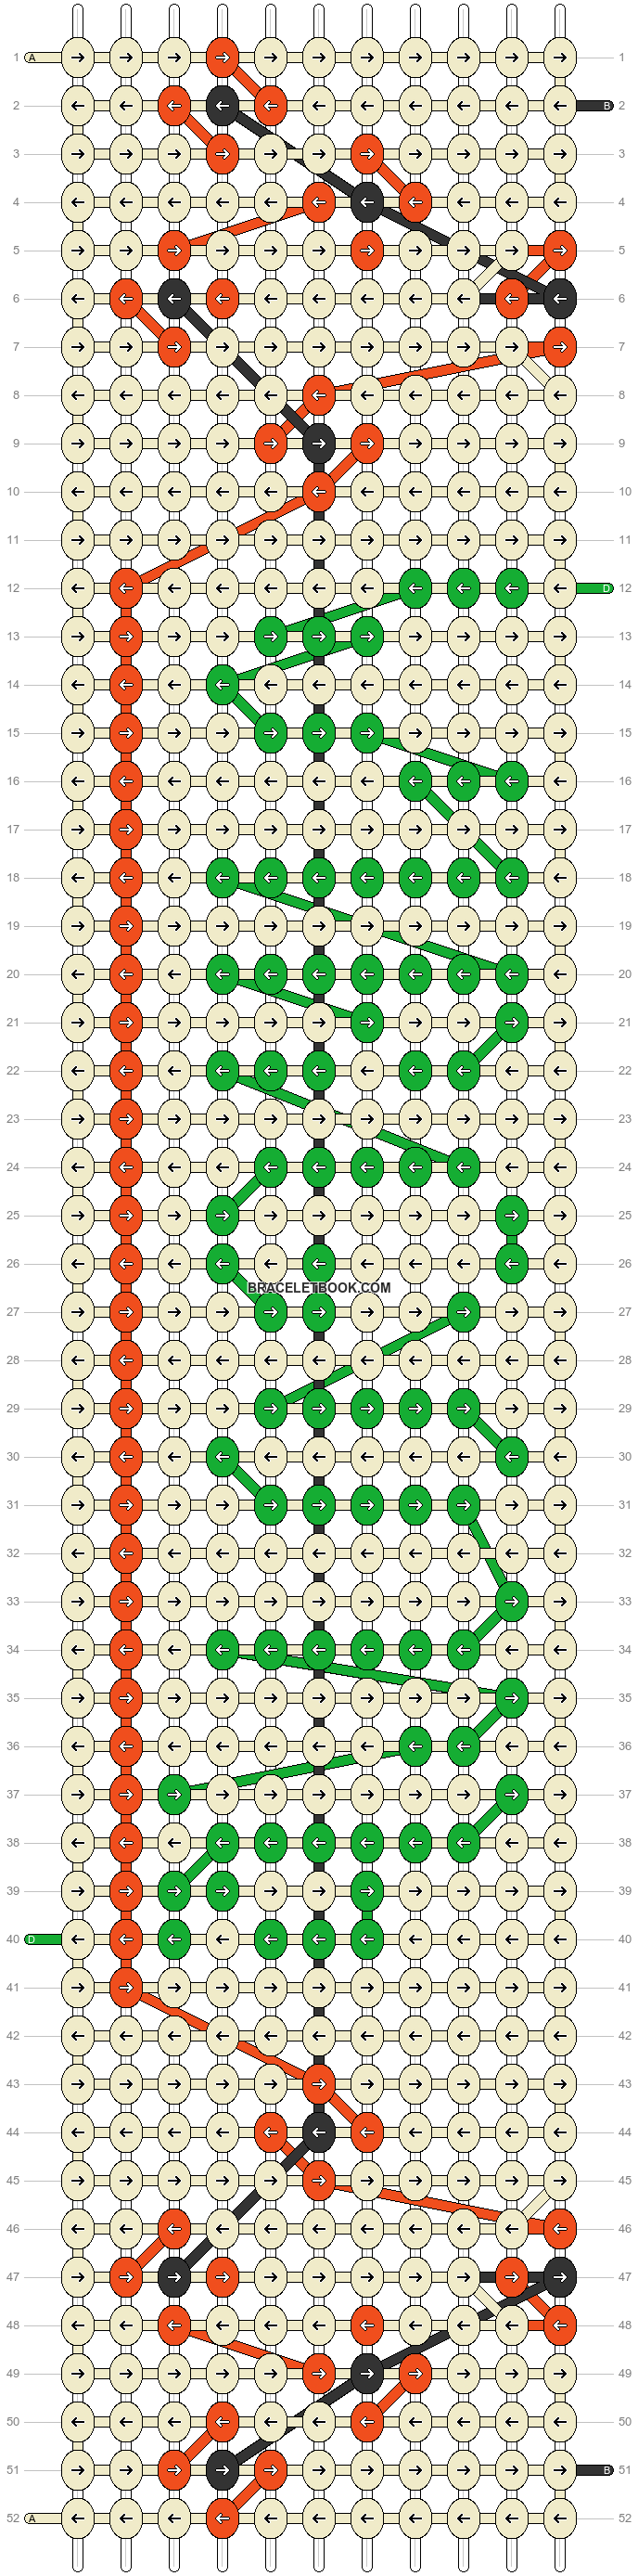 Alpha pattern #43121 variation #63217 pattern